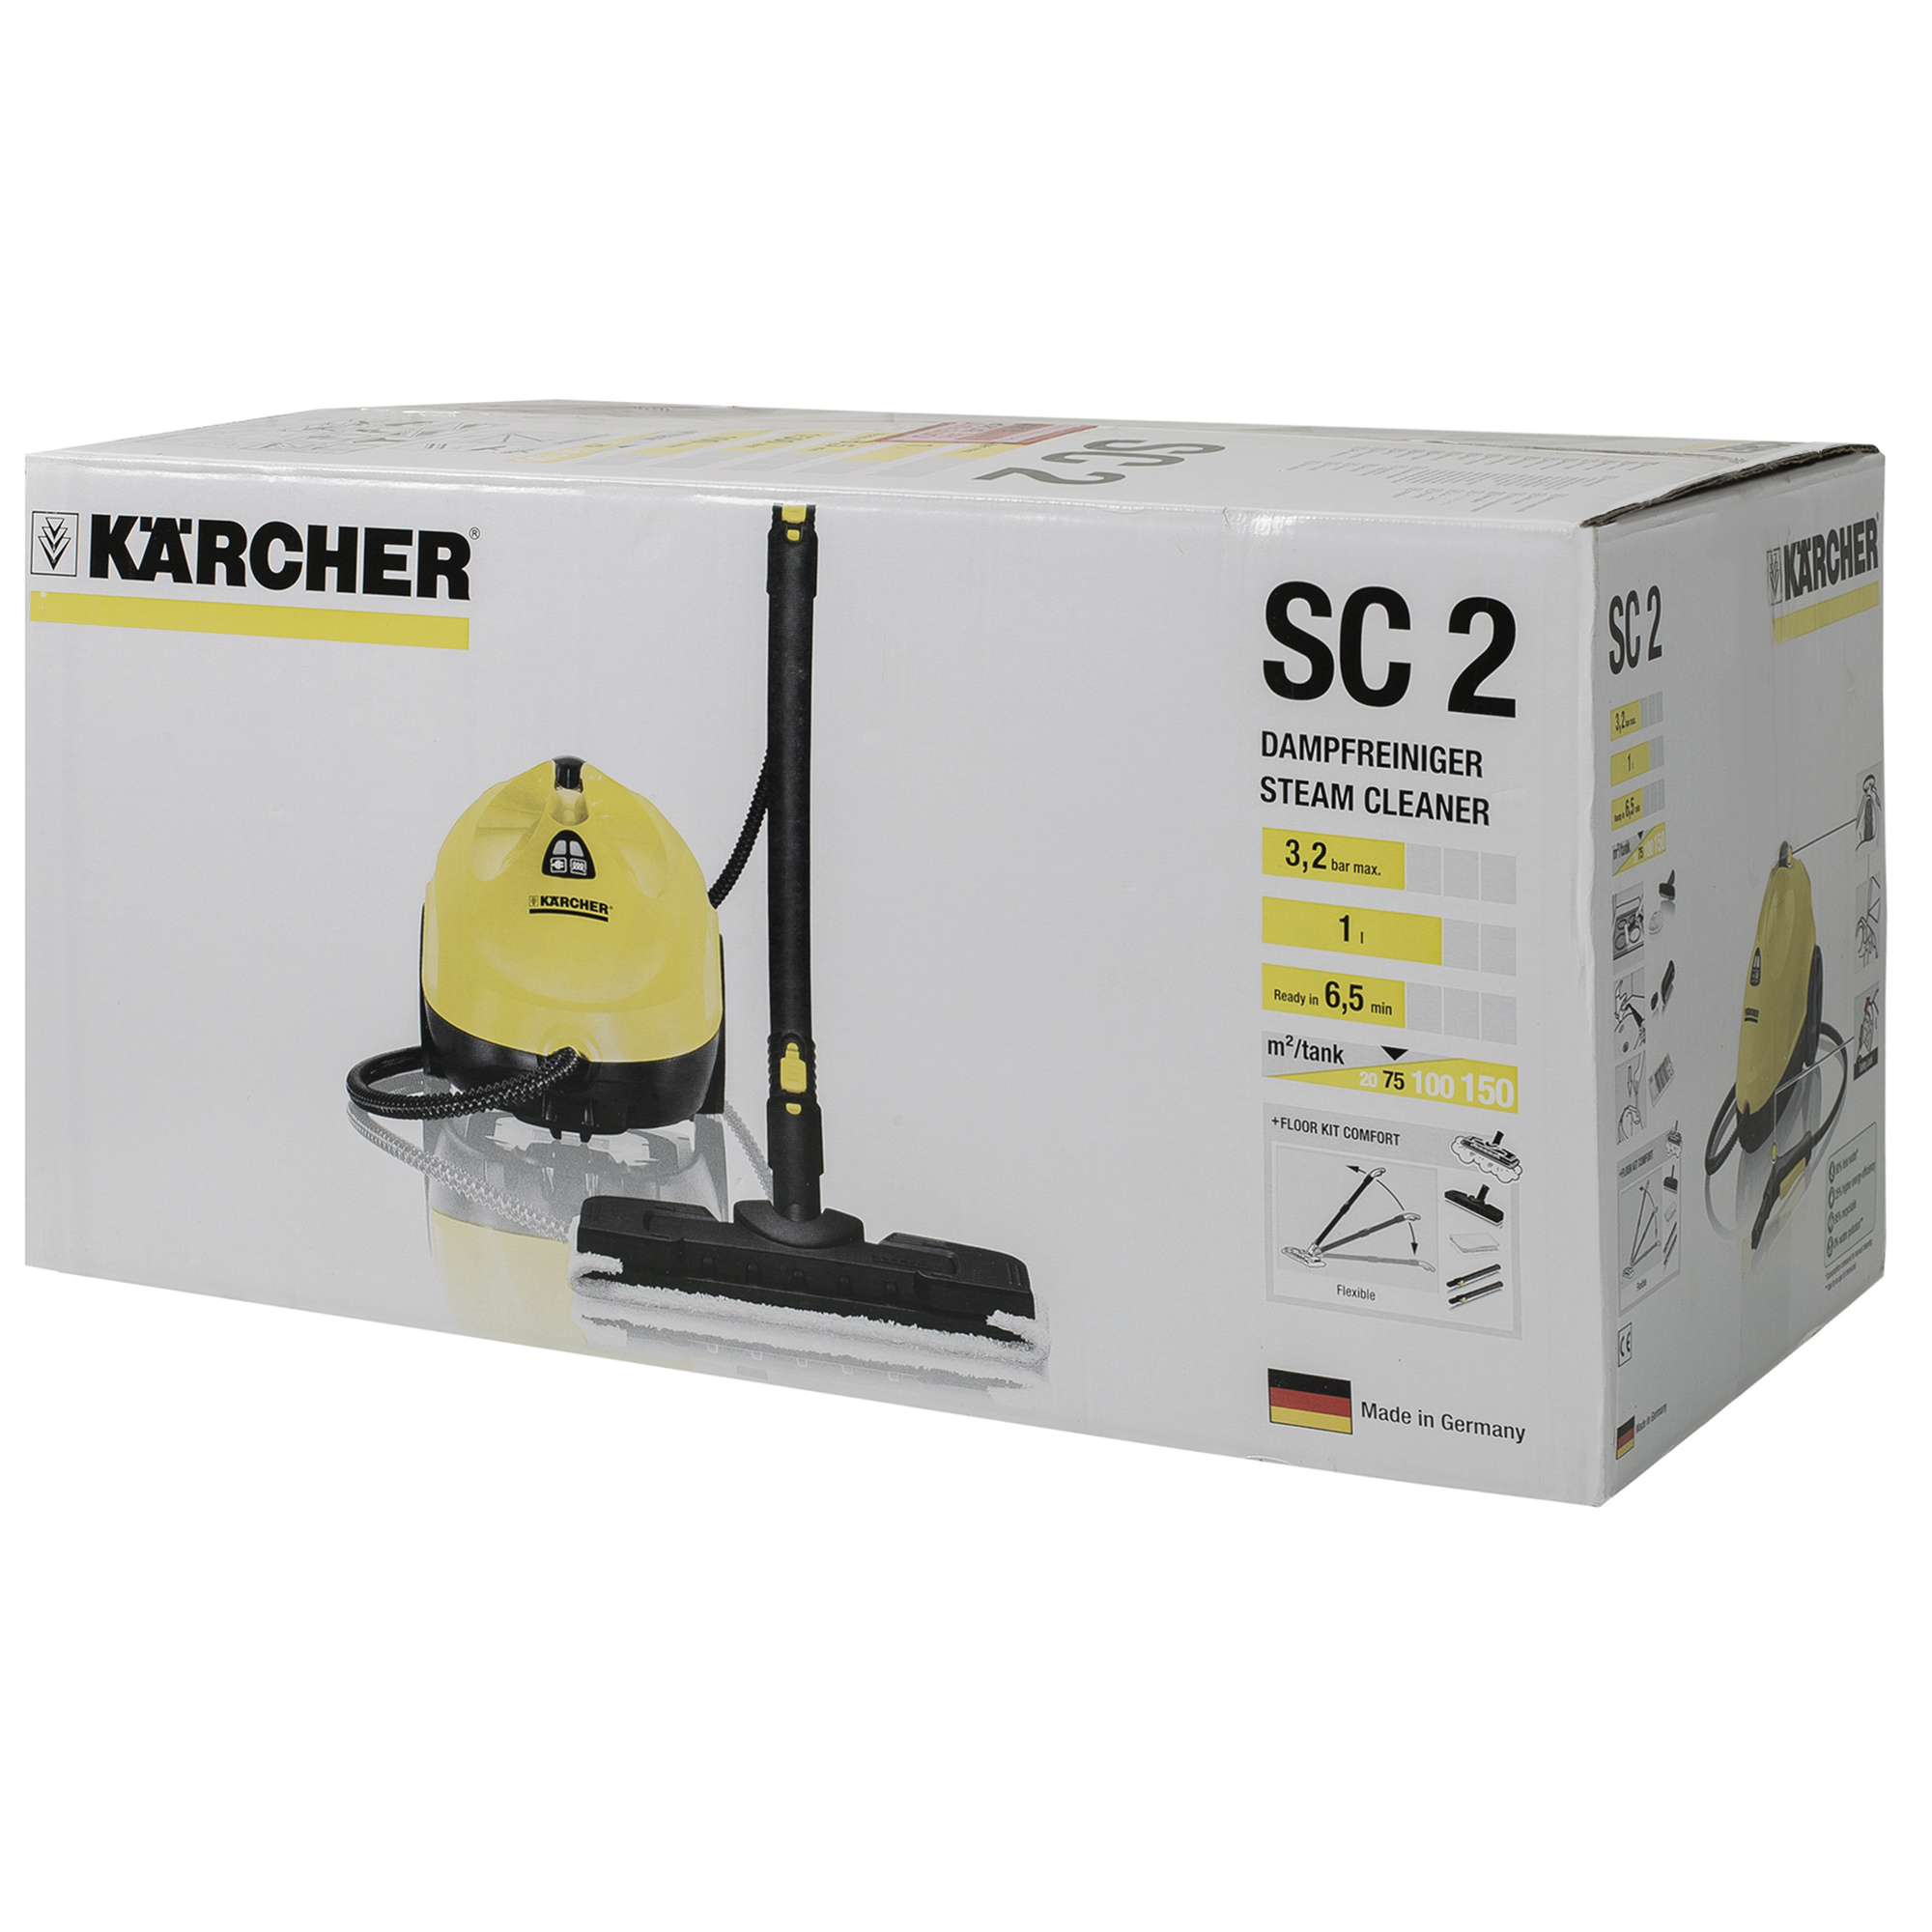 Karcher sc 2 easyfix цены. Пароочиститель Karcher SC 2 EASYFIX, 1500 Вт, 3.2 бар. Пароочиститель Karcher CS 2 1500вт 3,2бар. Пароочиститель Karcher SC 2. Керхер sc2 комплектация.